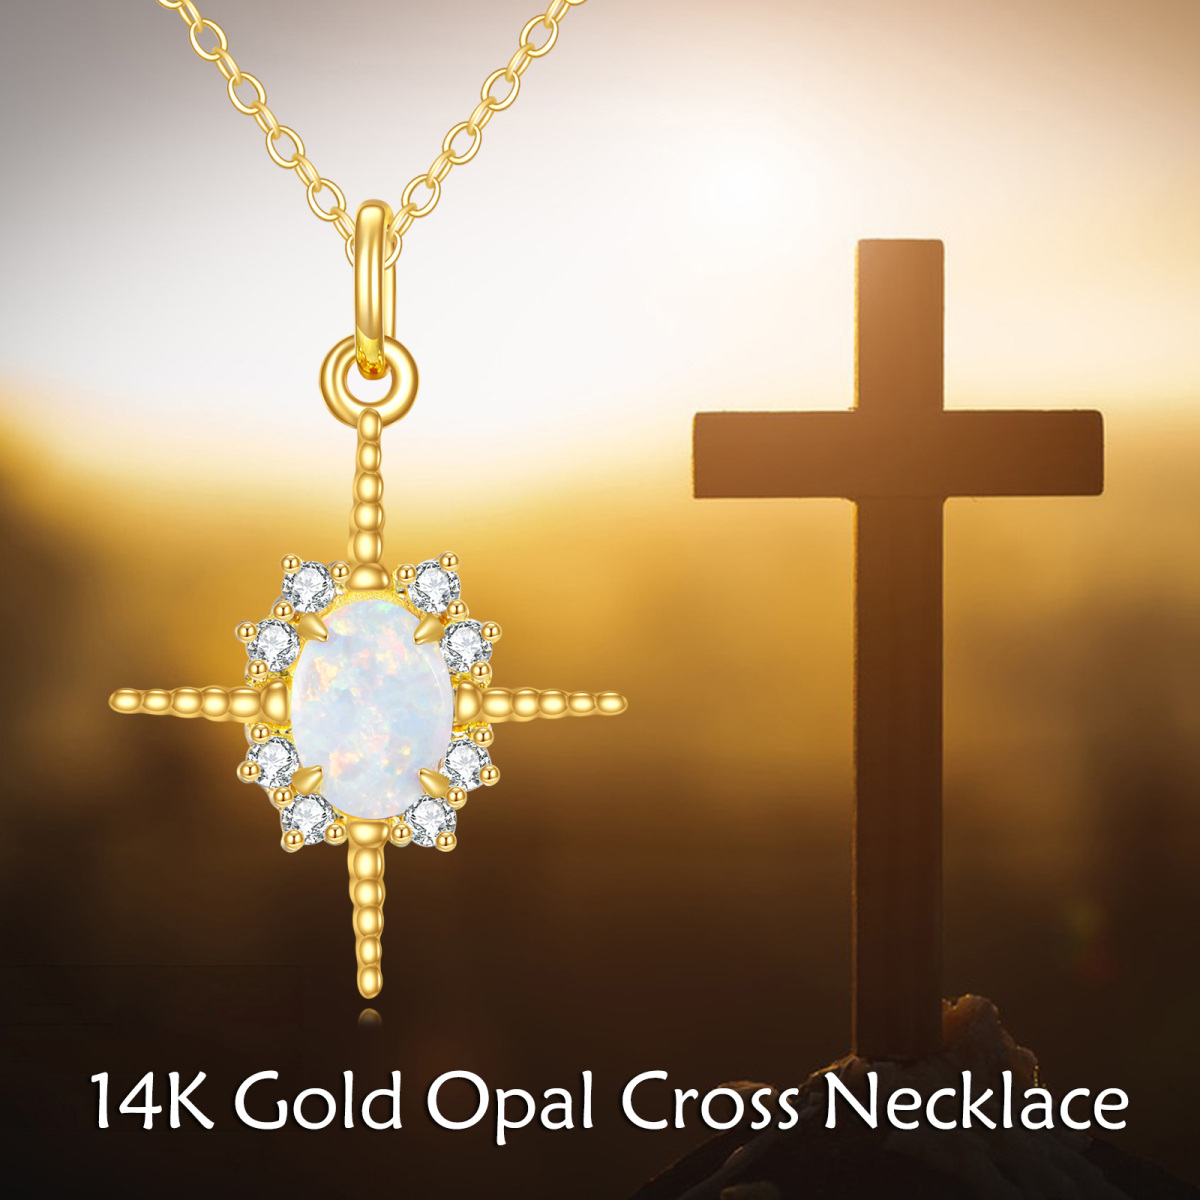 Collier croix en or 14K avec pendentif en forme d'opale ovale-6